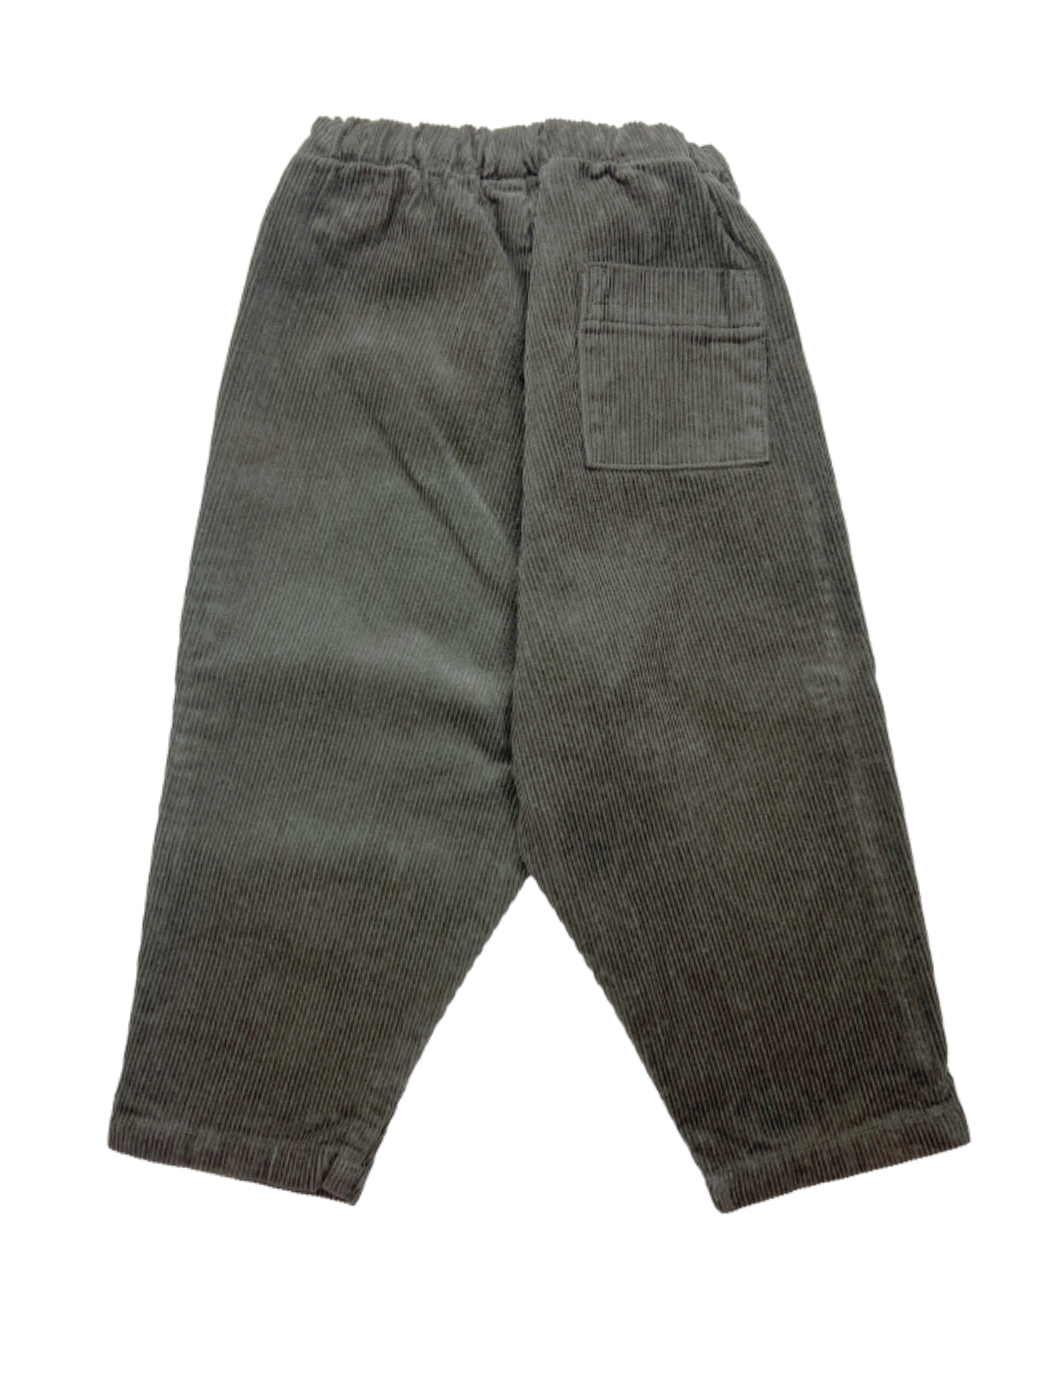 BONTON - Pantalon en velours côtelé kaki - 6 mois